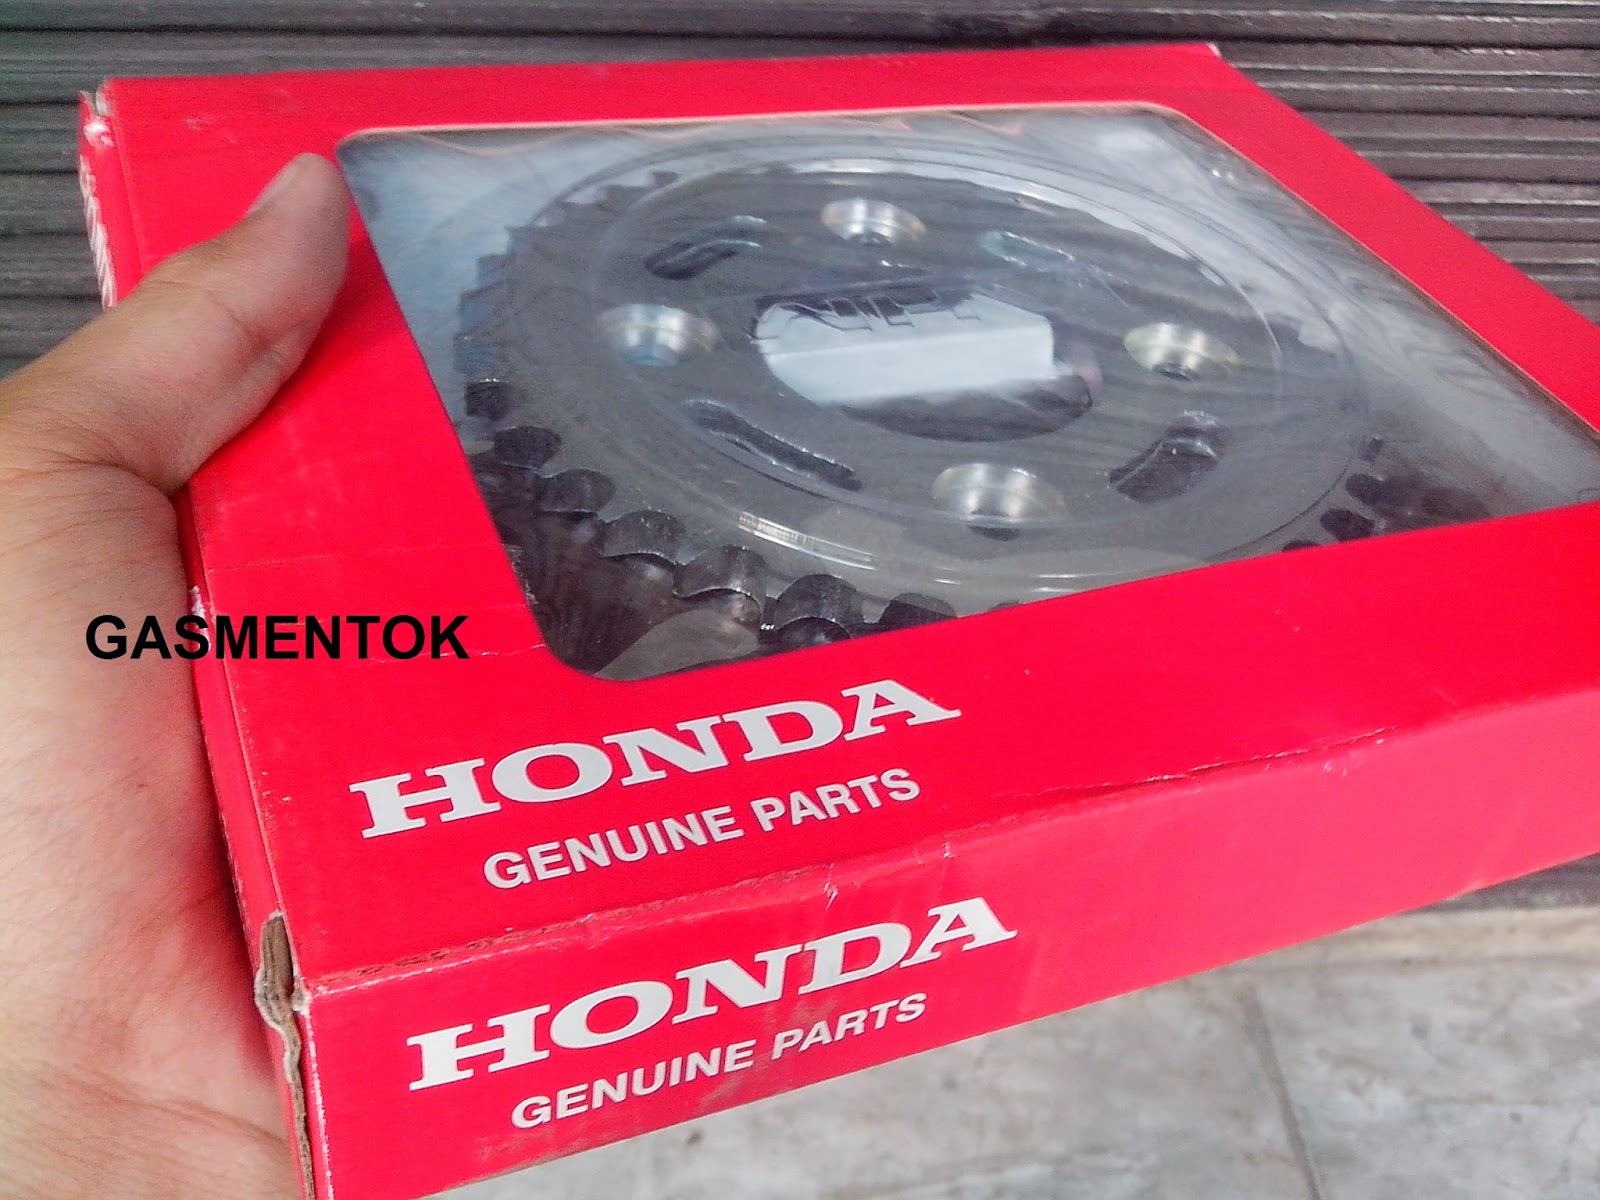 Modifikasi Ringan Ban Gearset Honda Supra X 125 Gasmentoknet